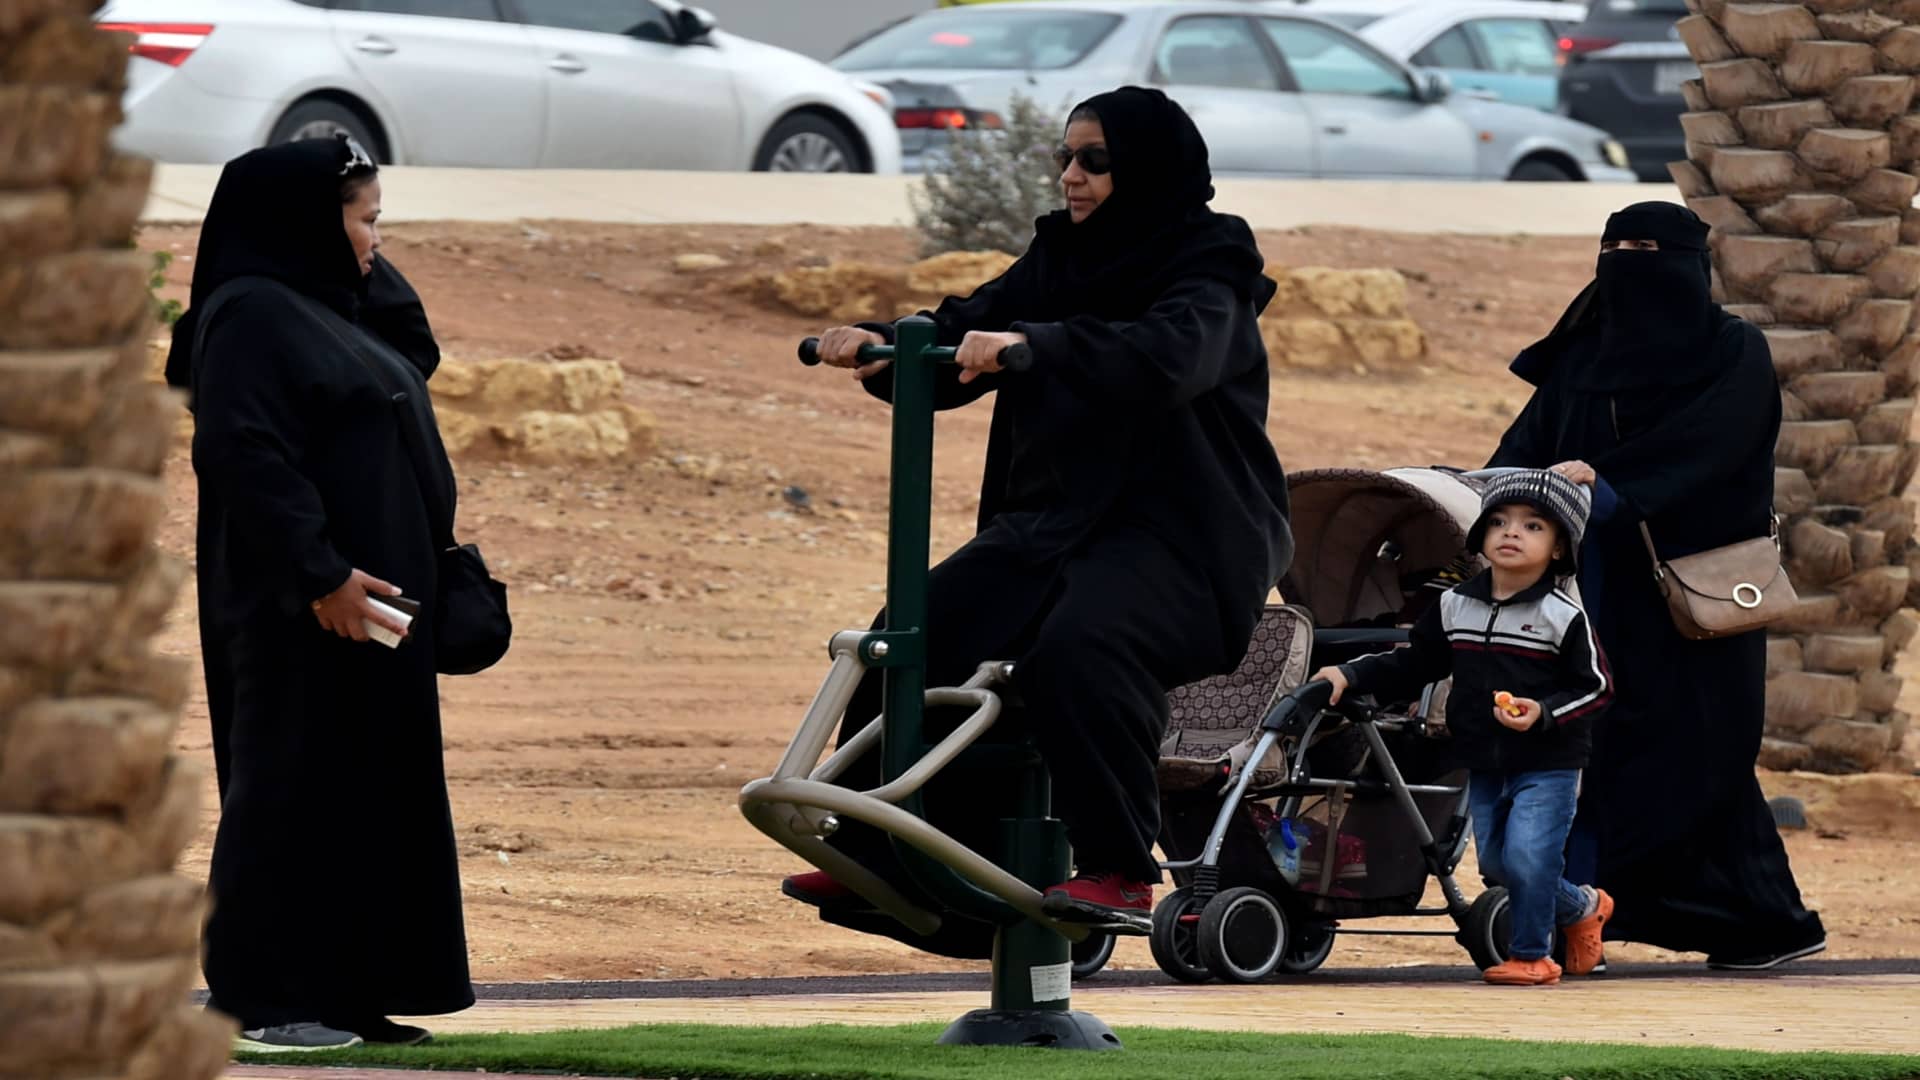 A Saudi woman plays in a playground pior to the 2018 Saudia Ad Diriyah E-Prix Formula E Championship in Riyadh, on December 15, 2018 in Riyadh. (Photo by FAYEZ NURELDINE / AFP)(Photo credit should read FAYEZ NURELDINE/AFP/Getty Images)